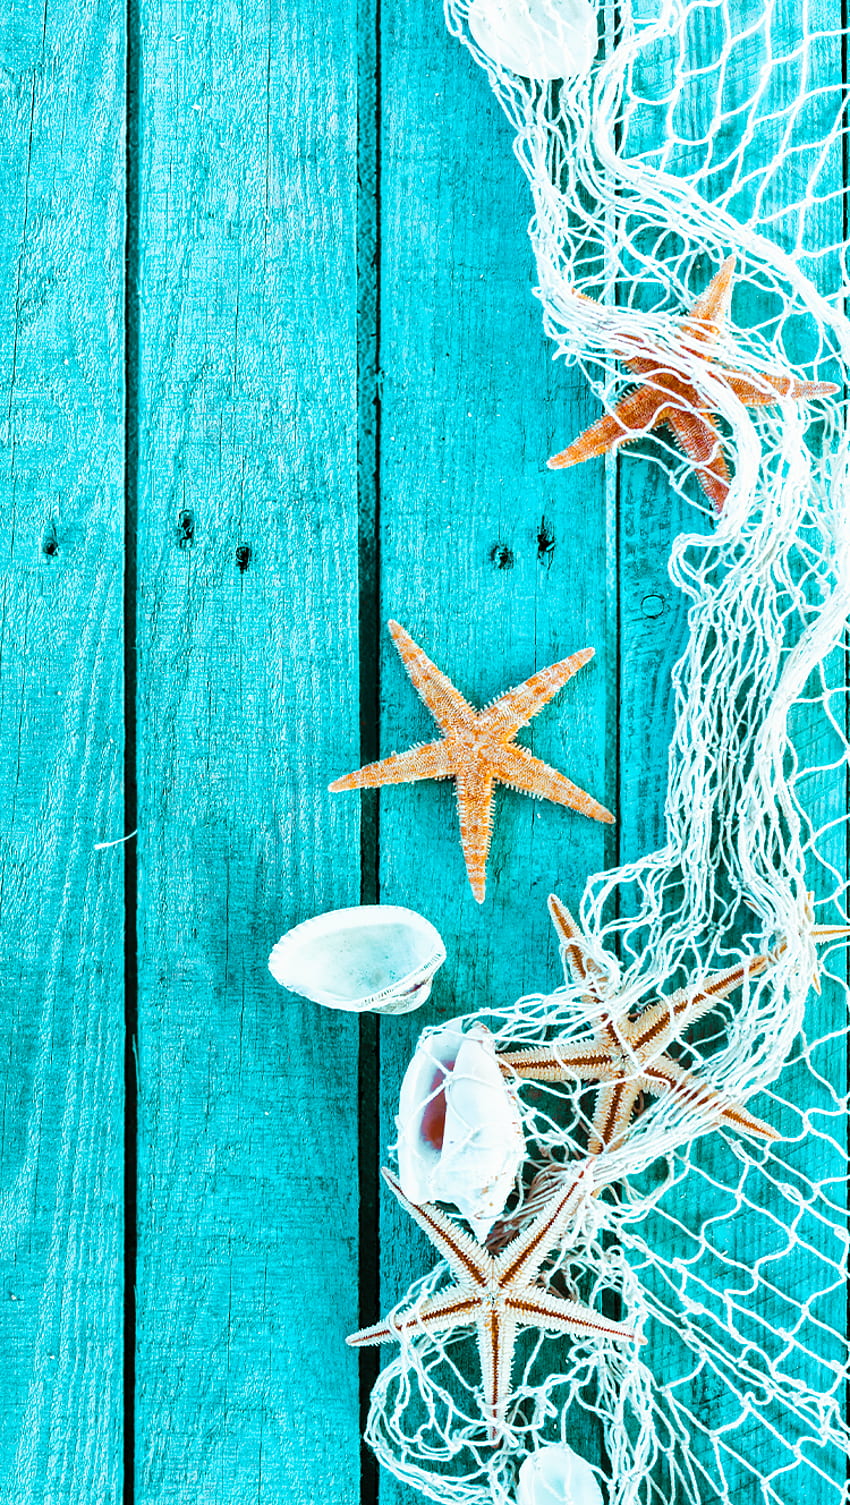 Ƒ↑¡TOCA Y OBTÉN LA APLICACIÓN! Art Creative Sea Star Blue Wood Shell iPhone 6 . Papeis de parede, Papel de parede de verão, Papel de parede praia fondo de pantalla del teléfono